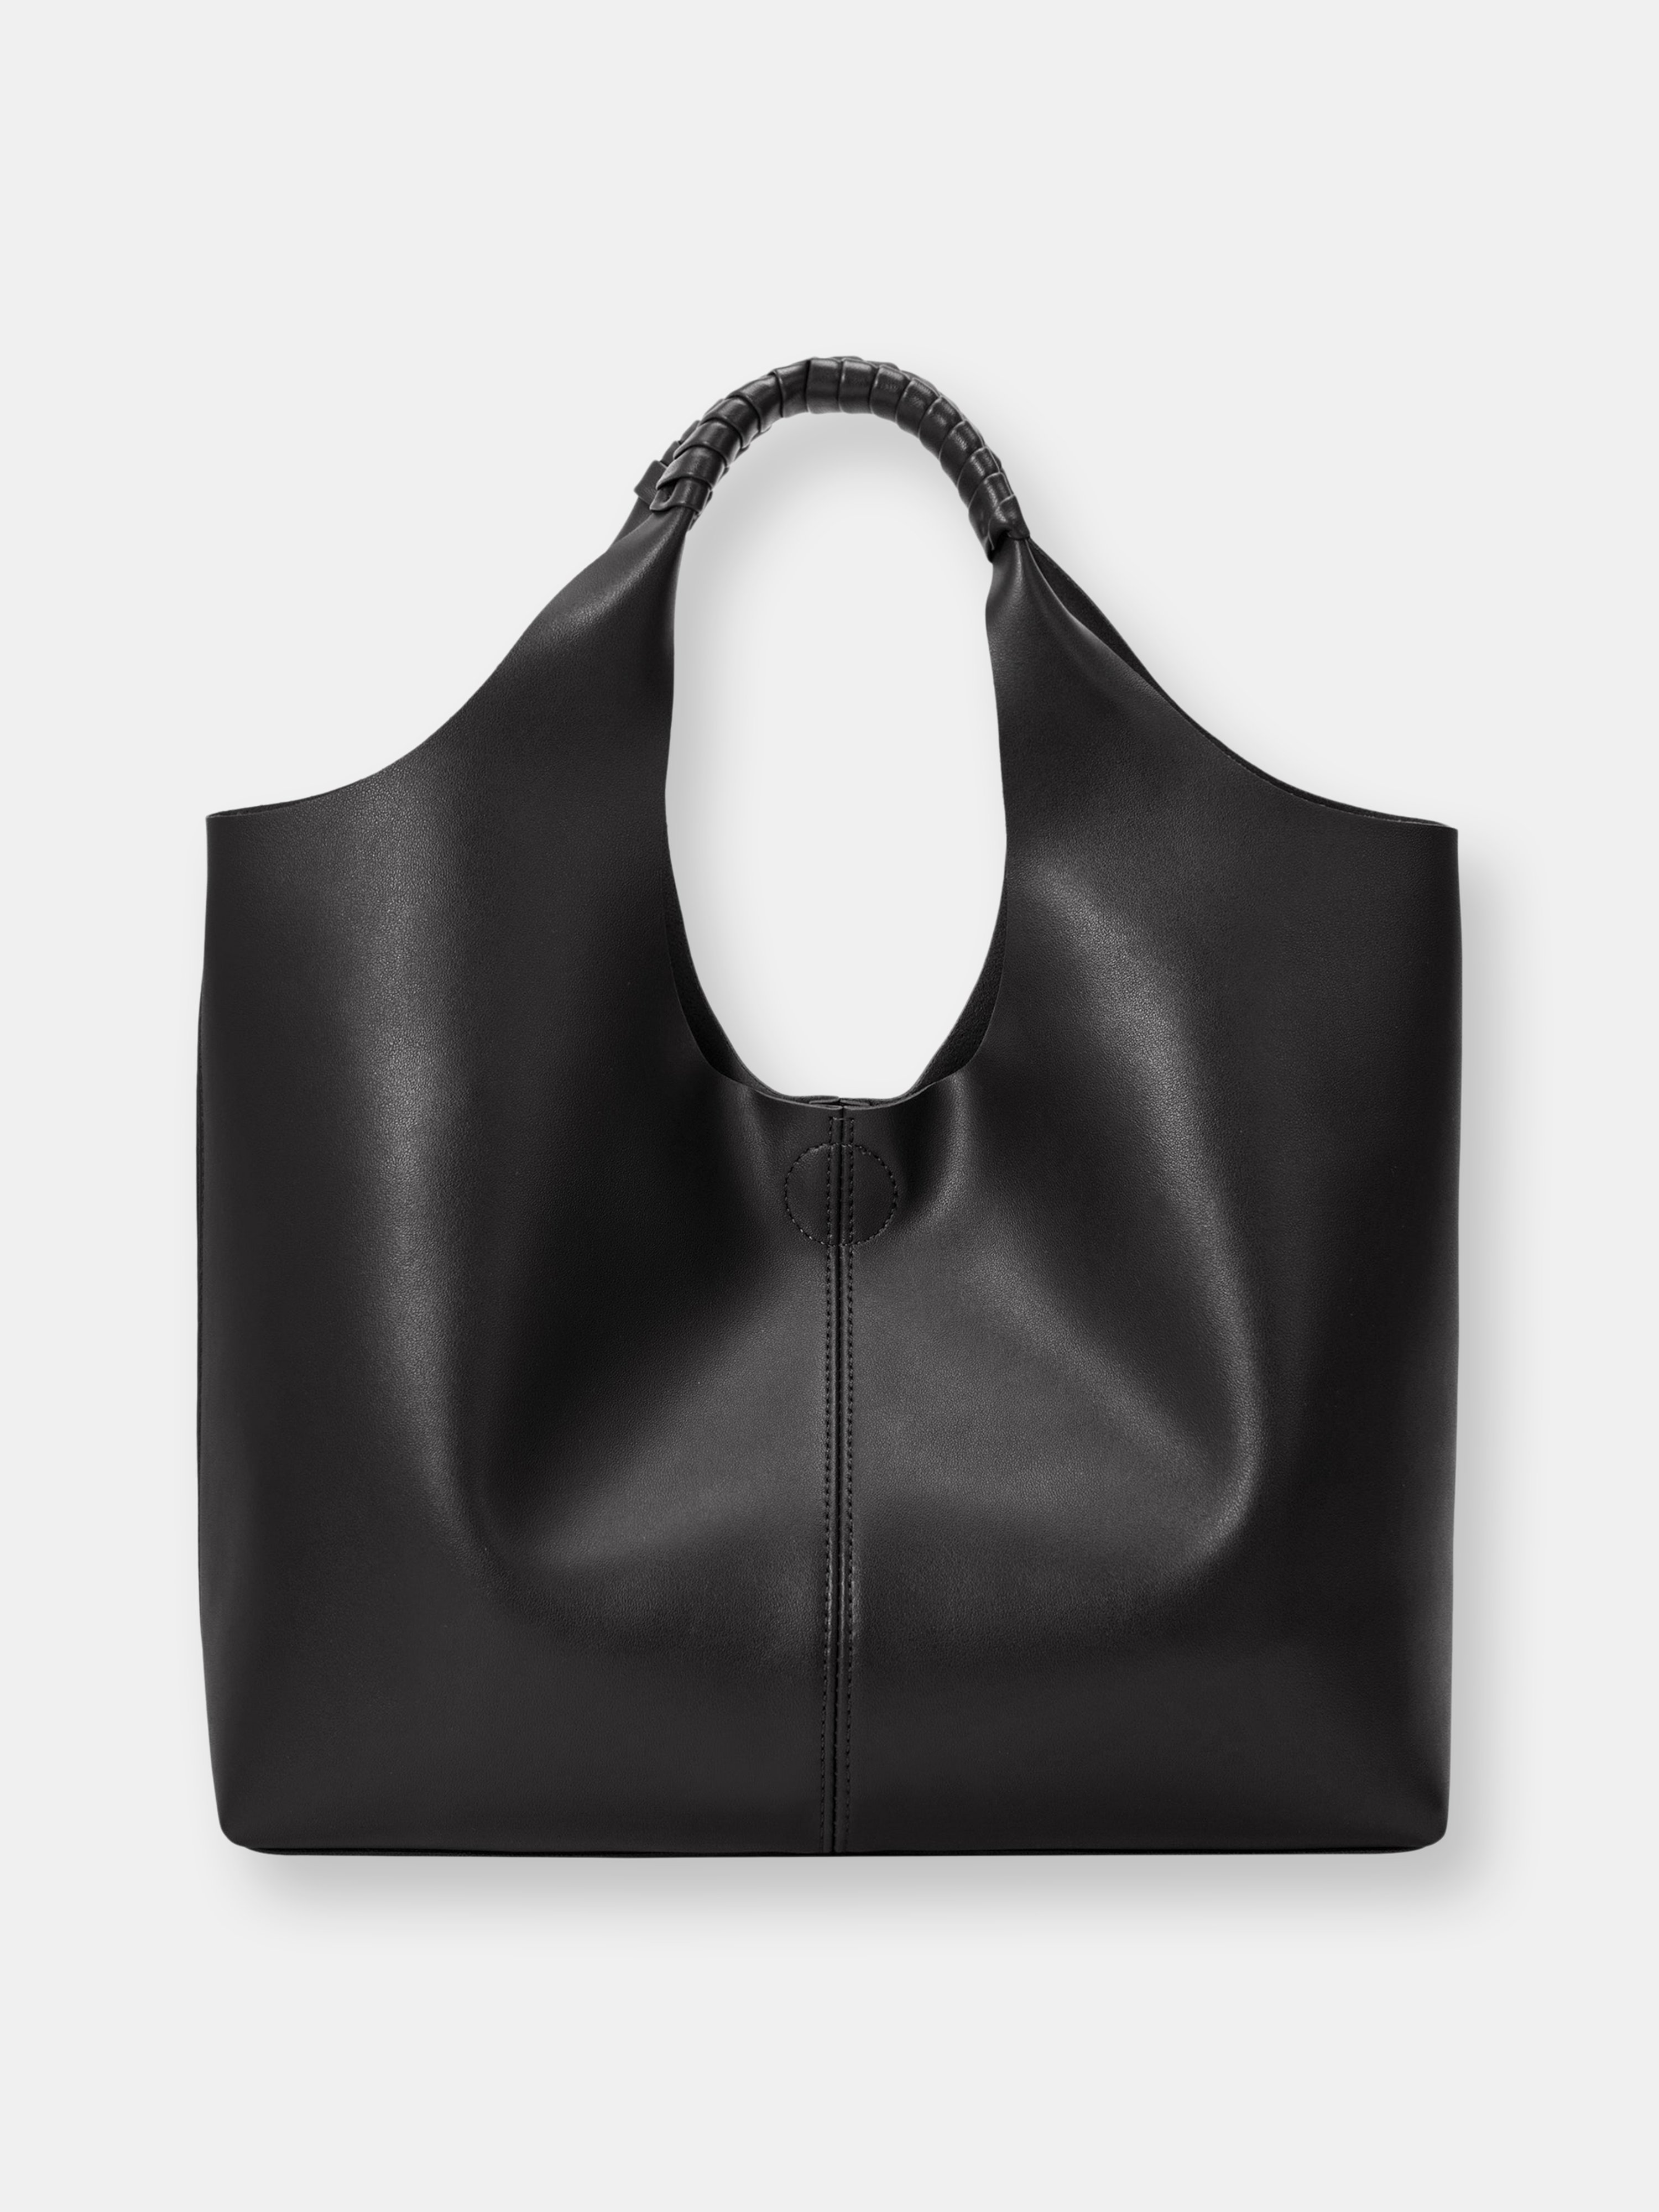 Melie Bianco Women's Linda Tote Bag In Black